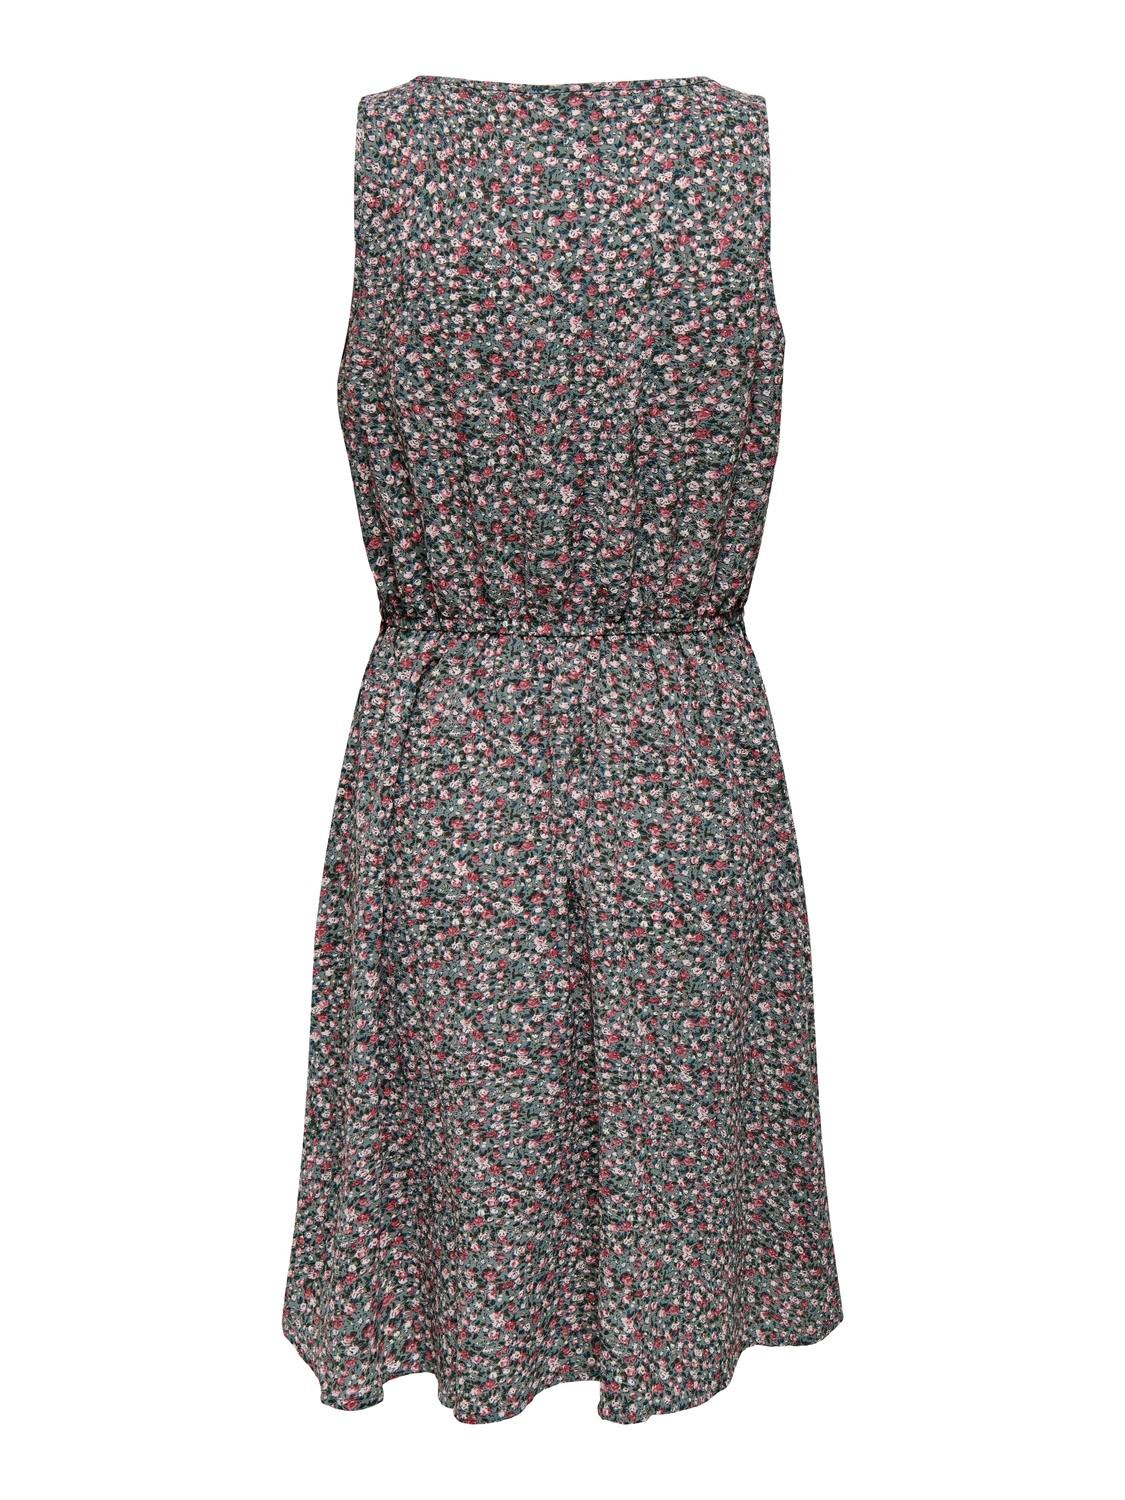 ONLY Printed Short Dress -Balsam Green - 15222204